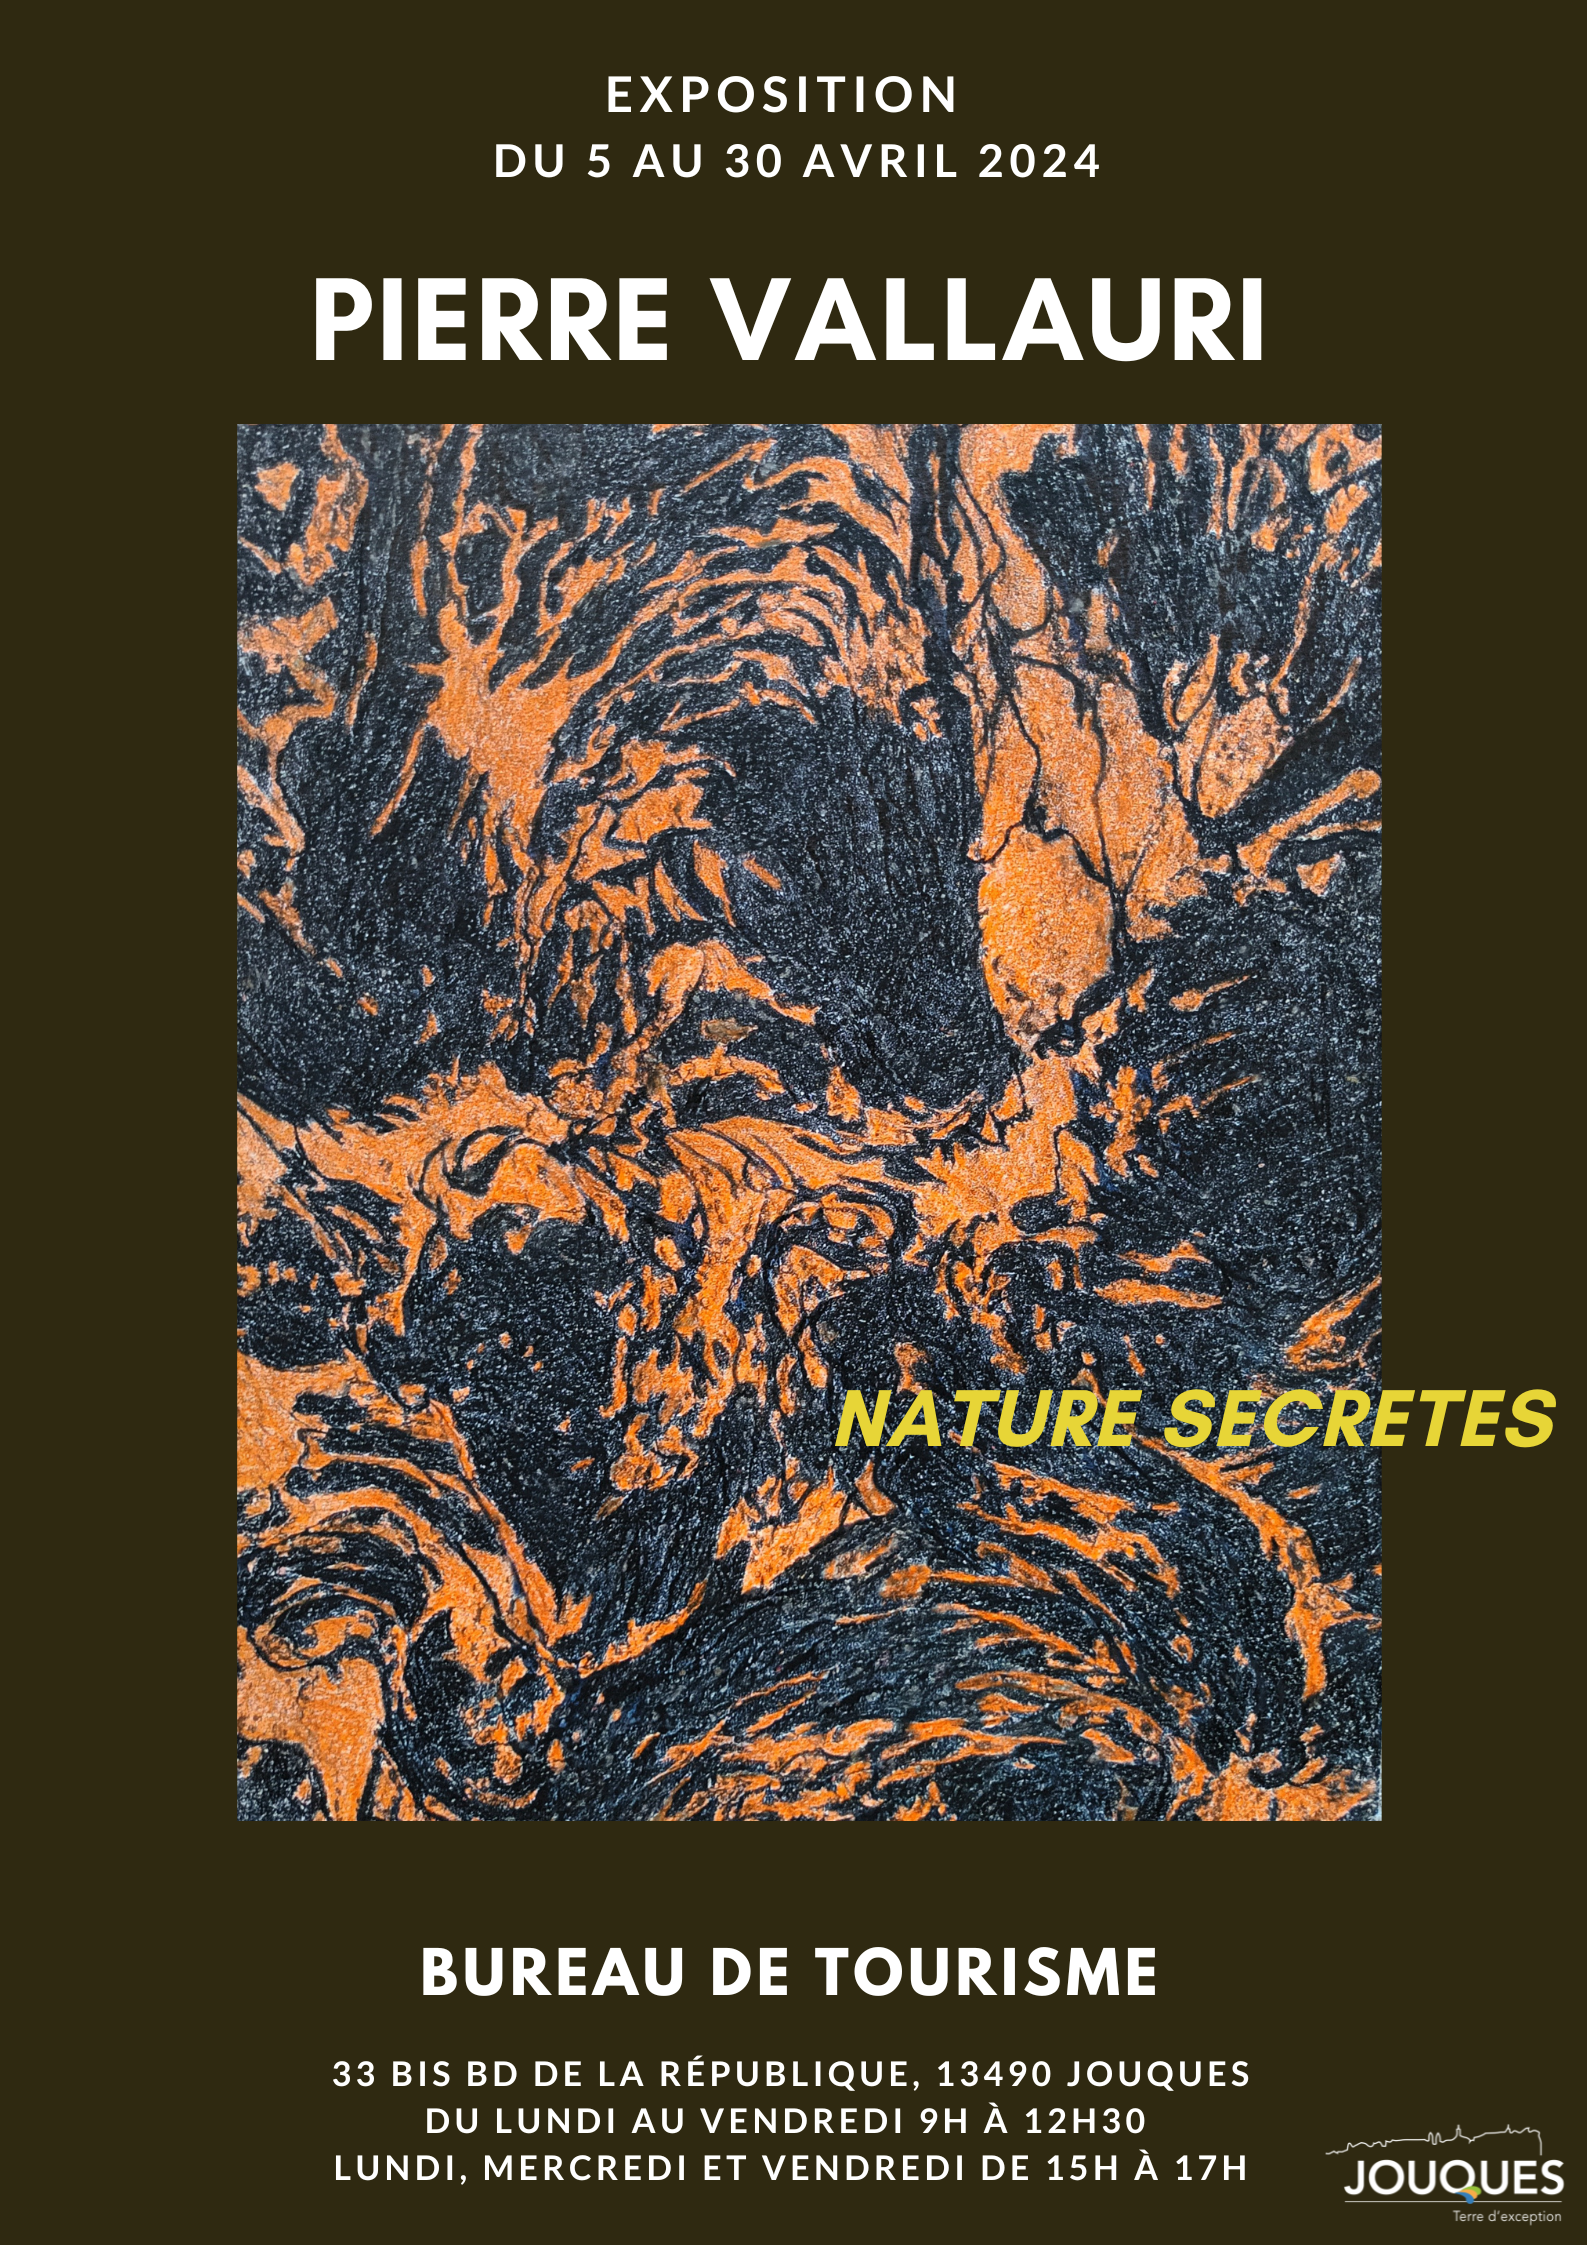 Nature secrète, exposition de Pierre Vallauri null France null null null null